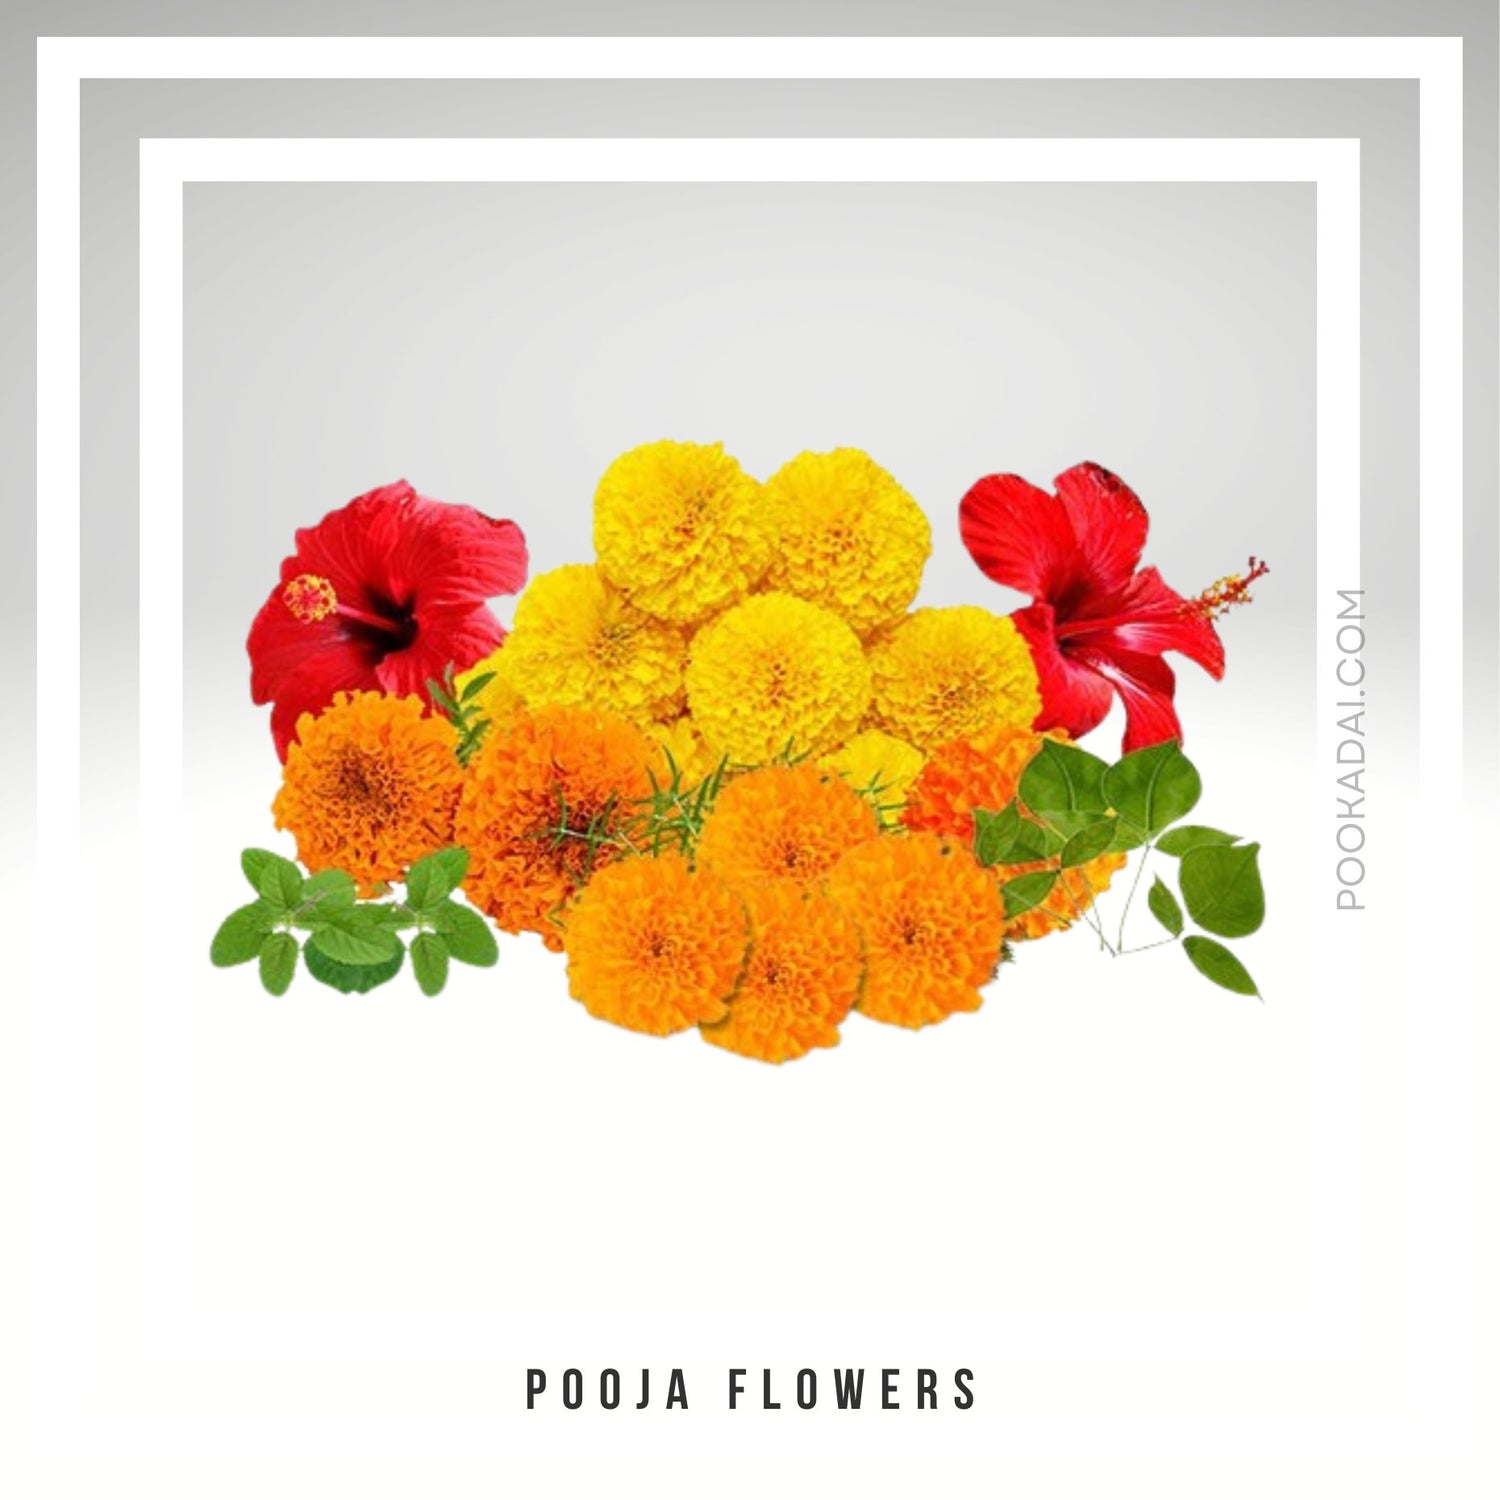 Pooja Flowers - Pookadai.com